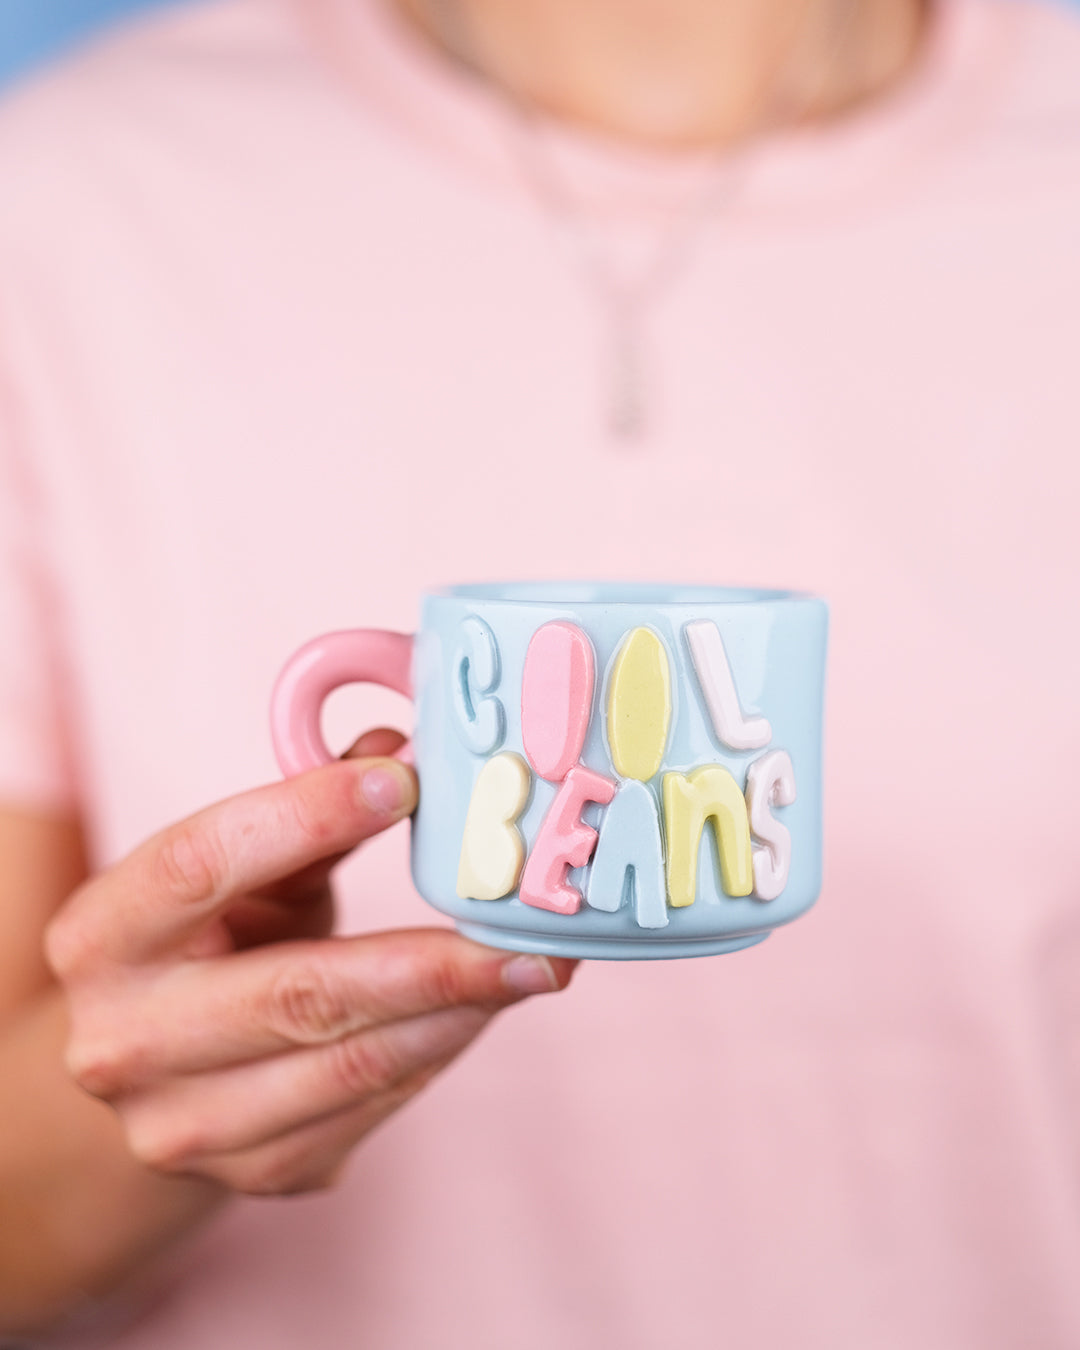 Cool Beans - Teacup mug